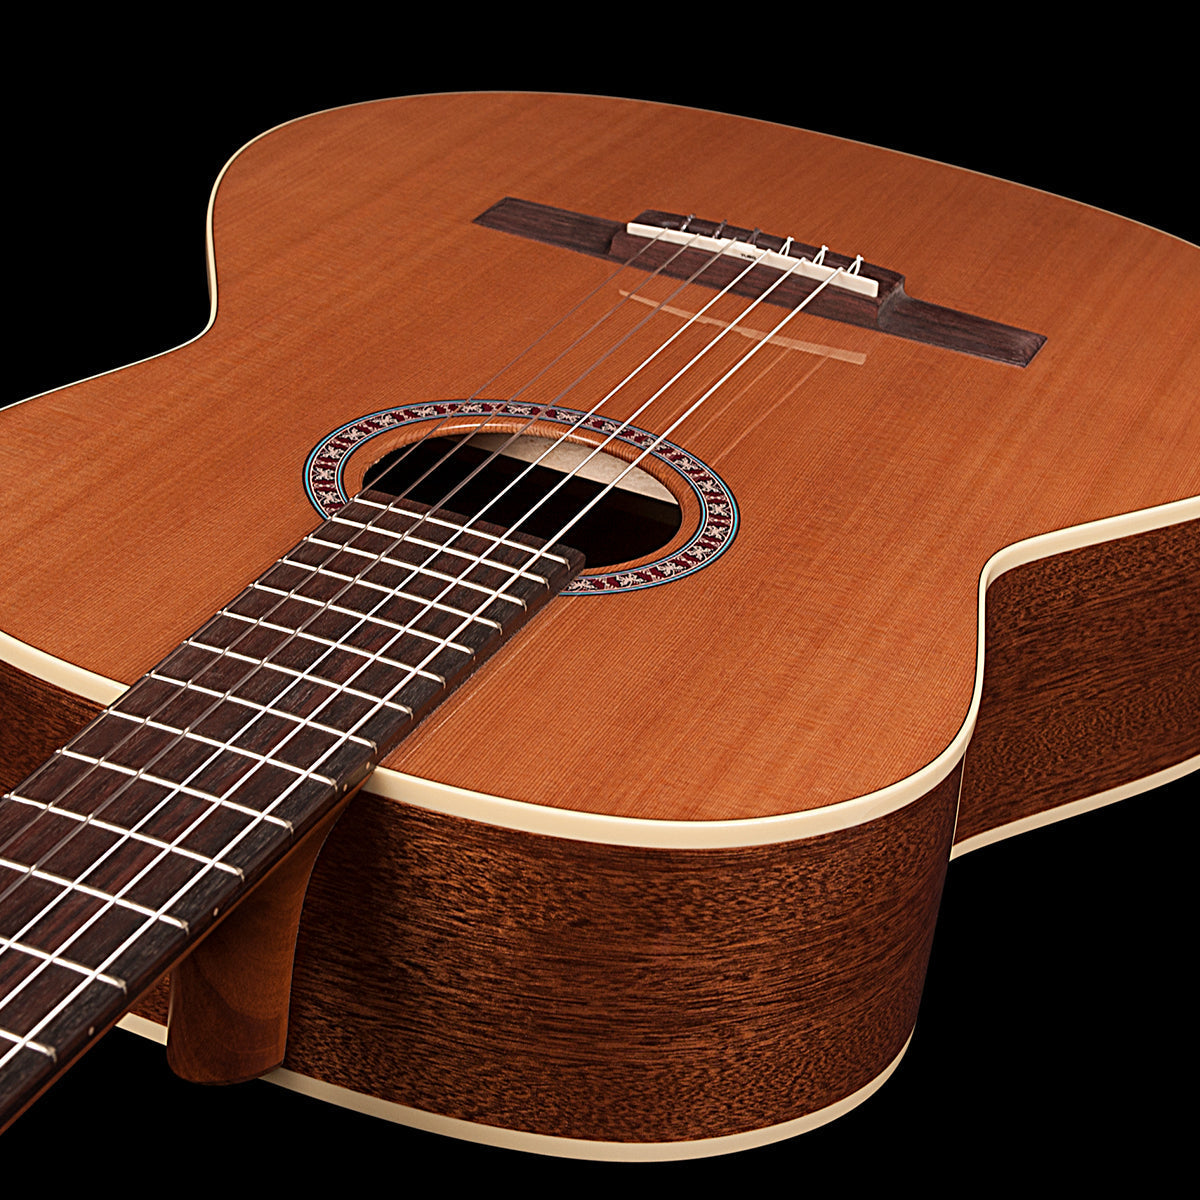 Godin Concert Nylon String Guitar, Acoustic Guitar for sale at Richards Guitars.